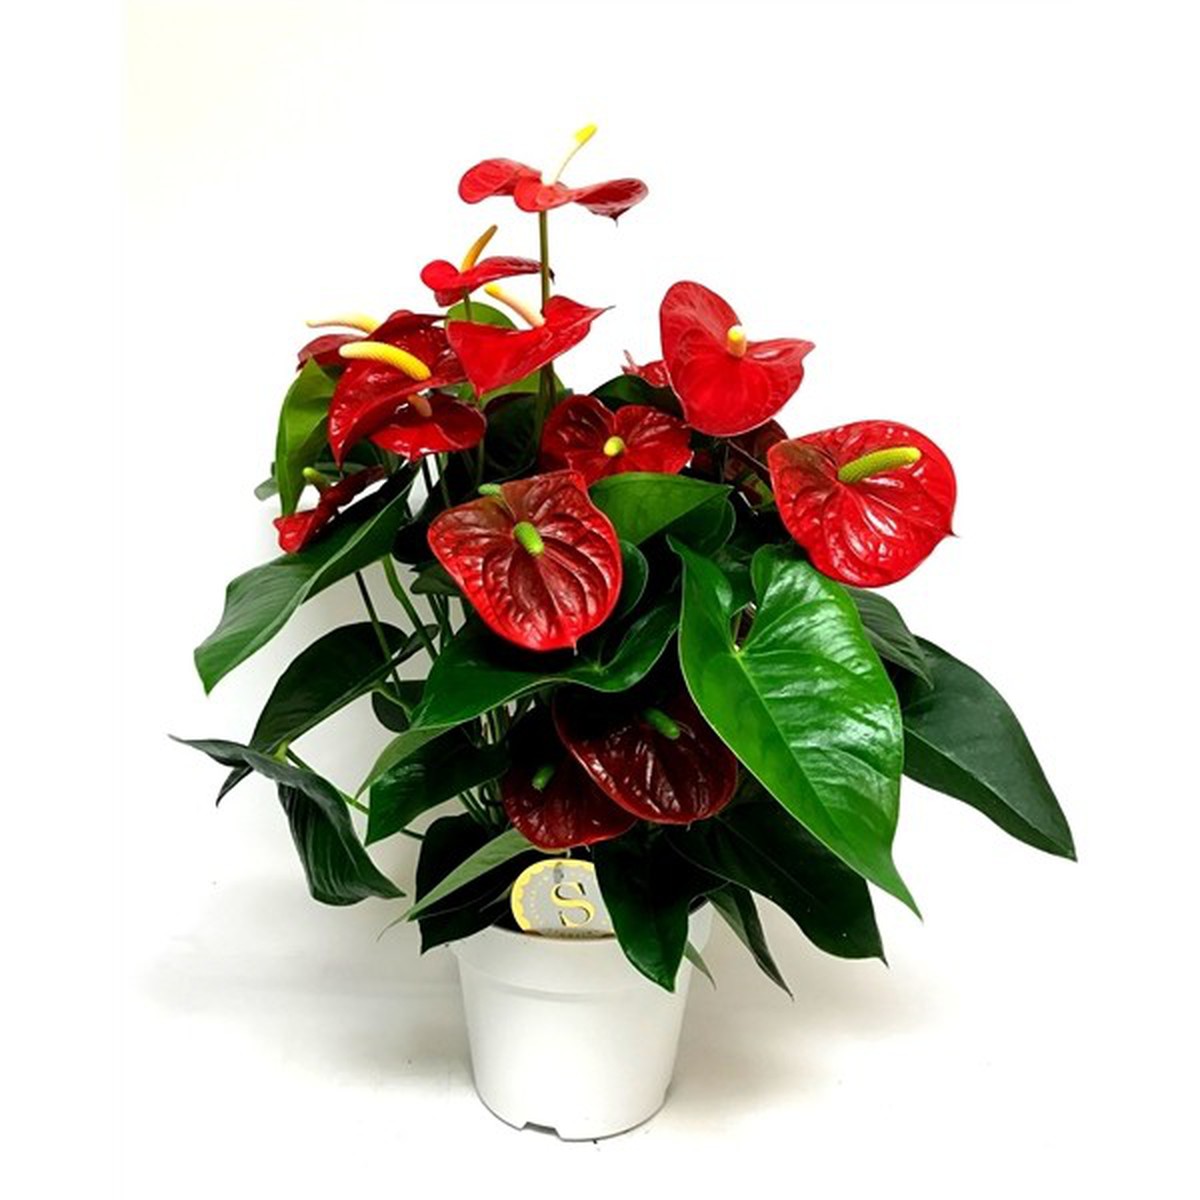   Anthurium andreanum 'Red Champion'  Pot de 21 cm h70